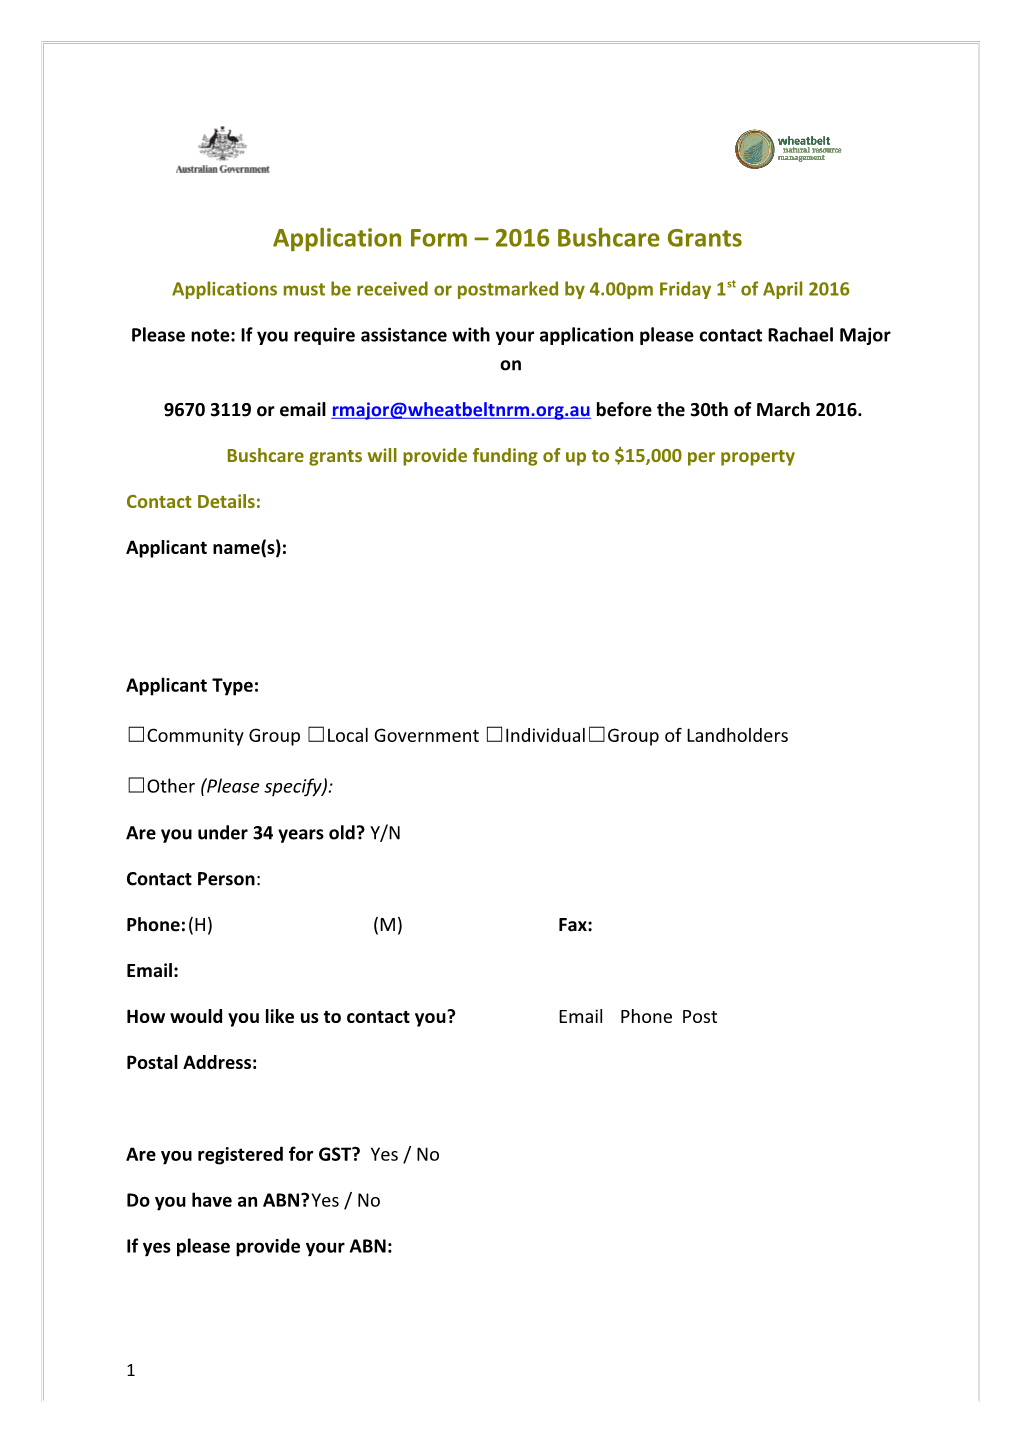 Application Form 2016Bushcare Grants